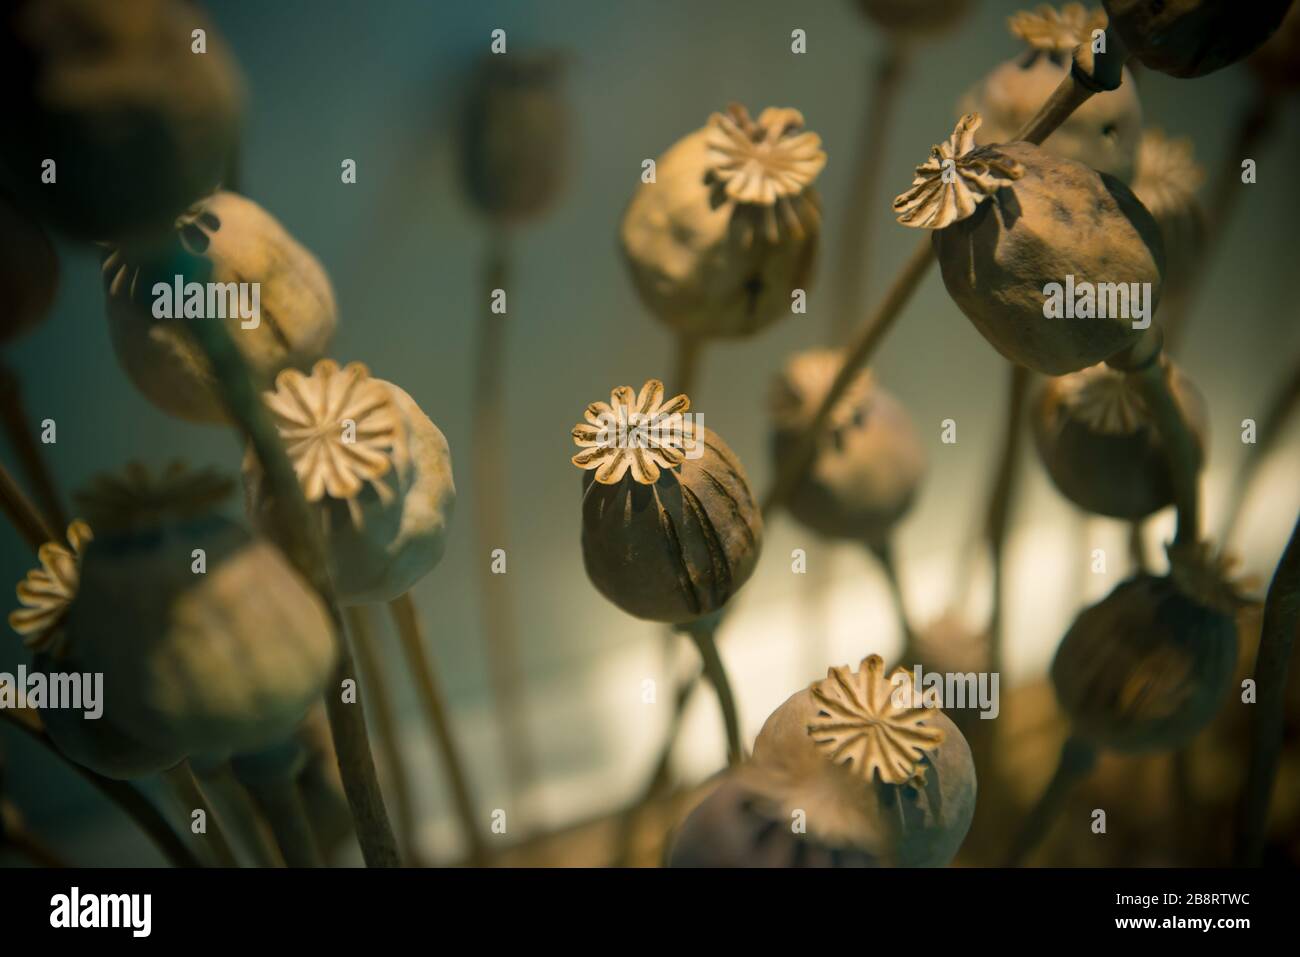 Opium poppy head, Plants for medicine or drugs. Stock Photo